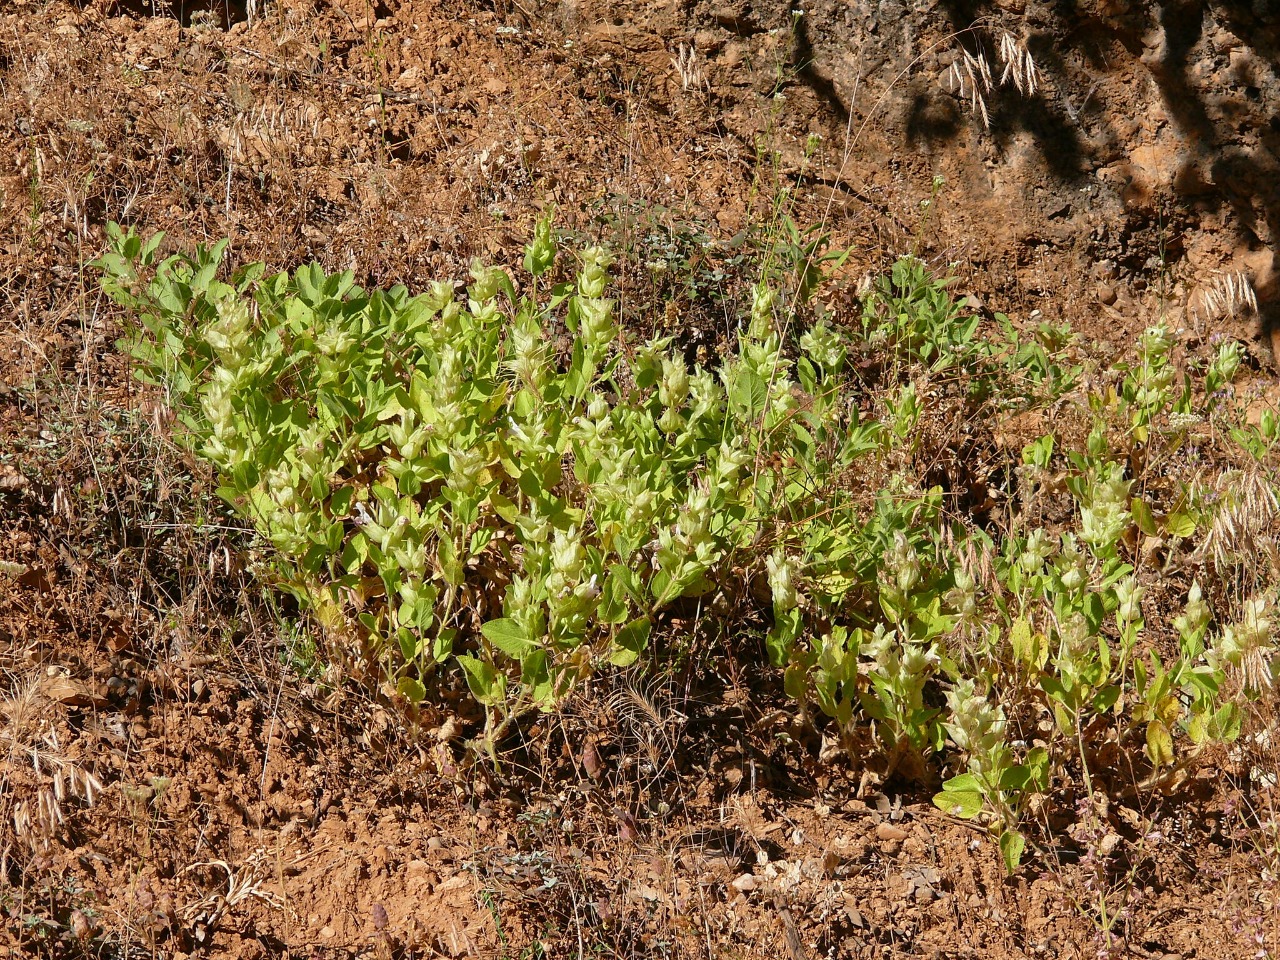 Salvia macrochlamys